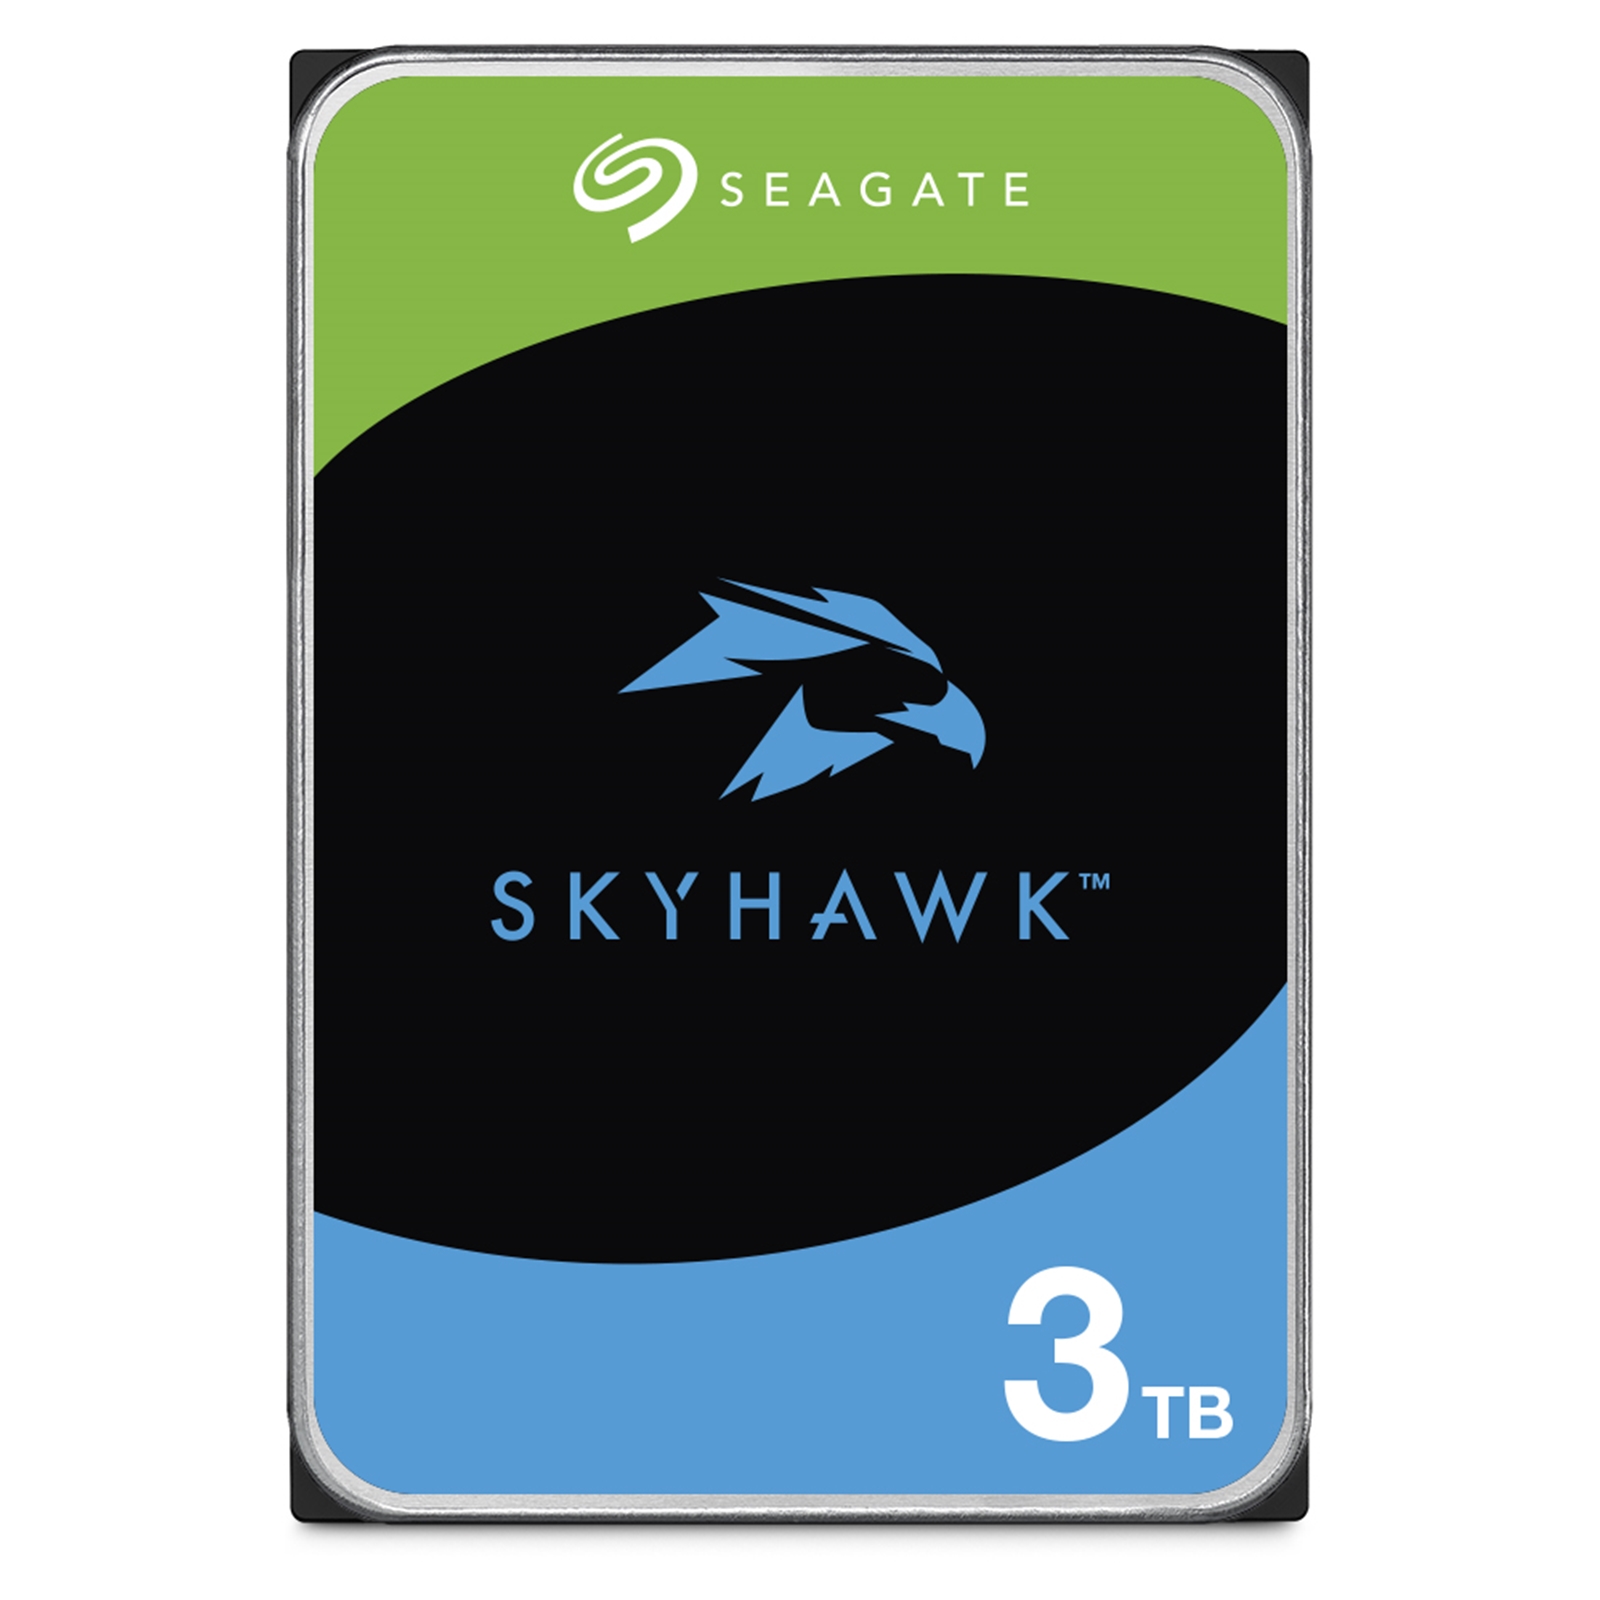 Seagate SkyHawk Surveillance ST3000VX009 3TB 3.5'' 5400RPM 256mb Cache SATA III Internal Hard Drive